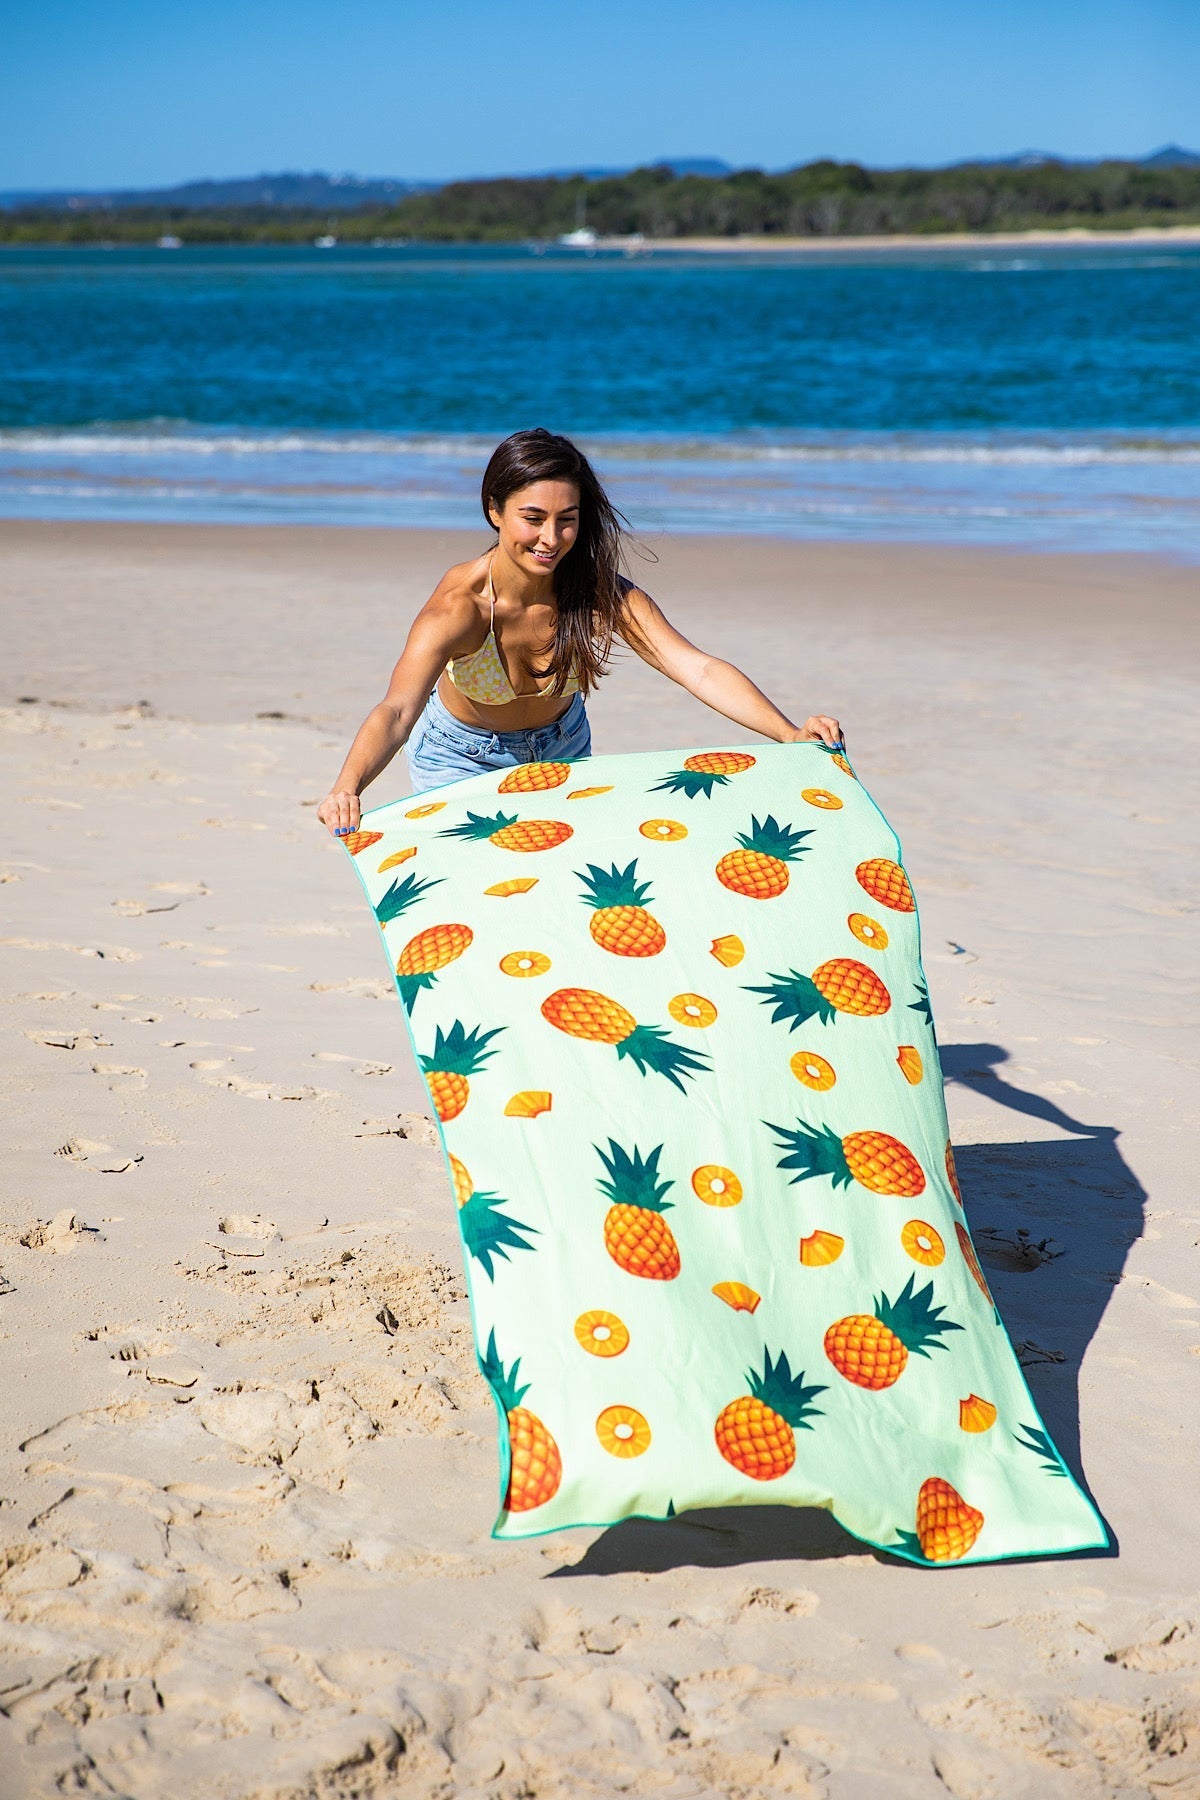 Bathroom Towels Towel, Pineapple Oversized Beach Towel for Gym